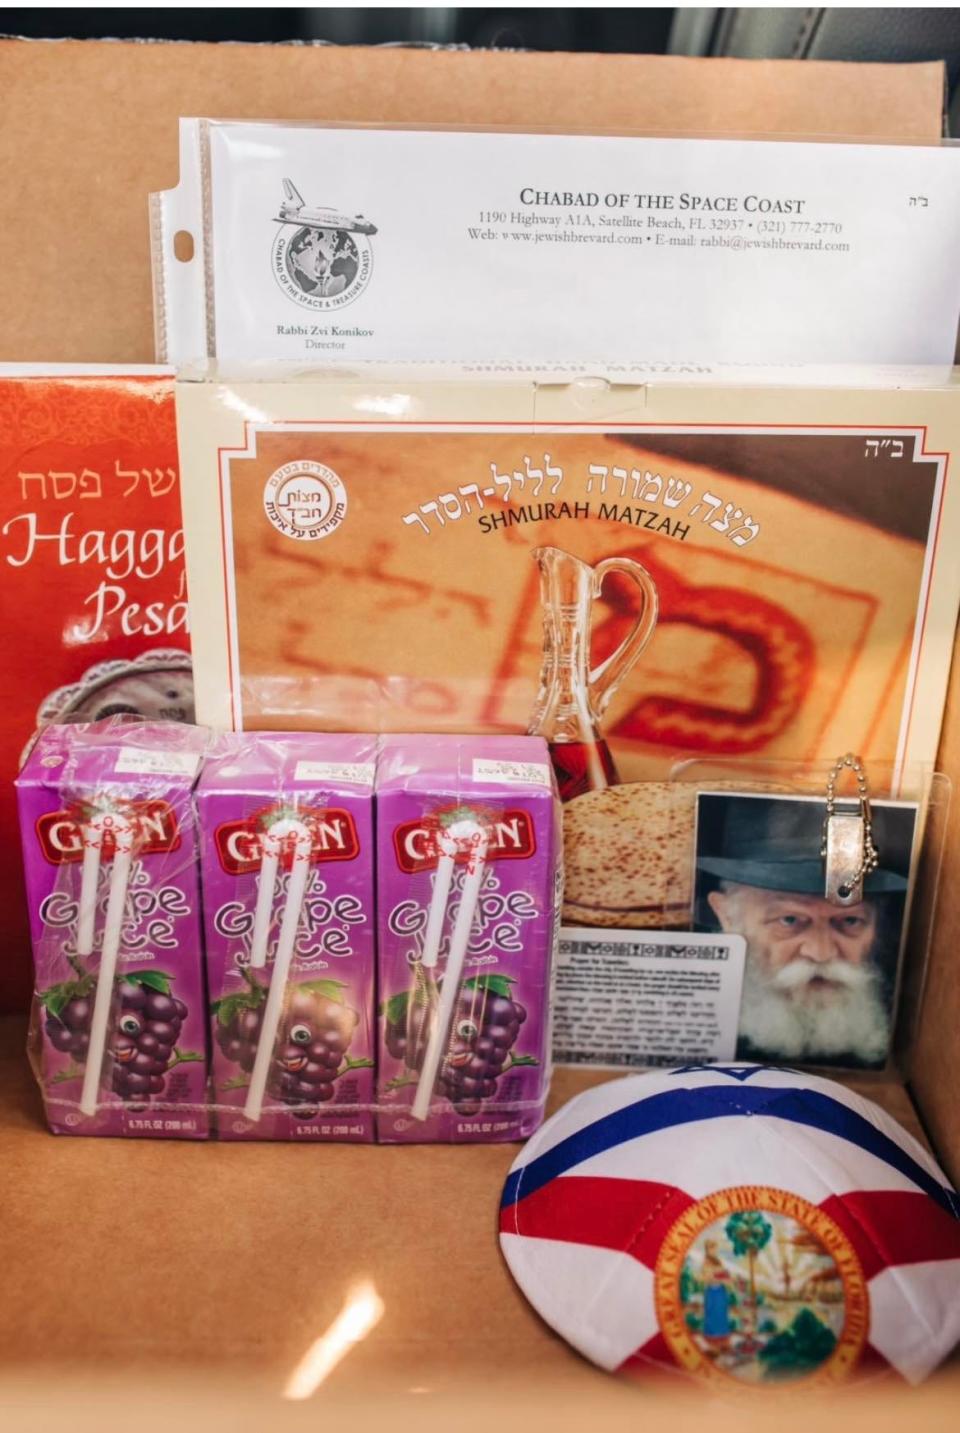 Items delivered to Israeli Astronaut Eytan Meir Stibbe by Rabbi Zvi Konikov